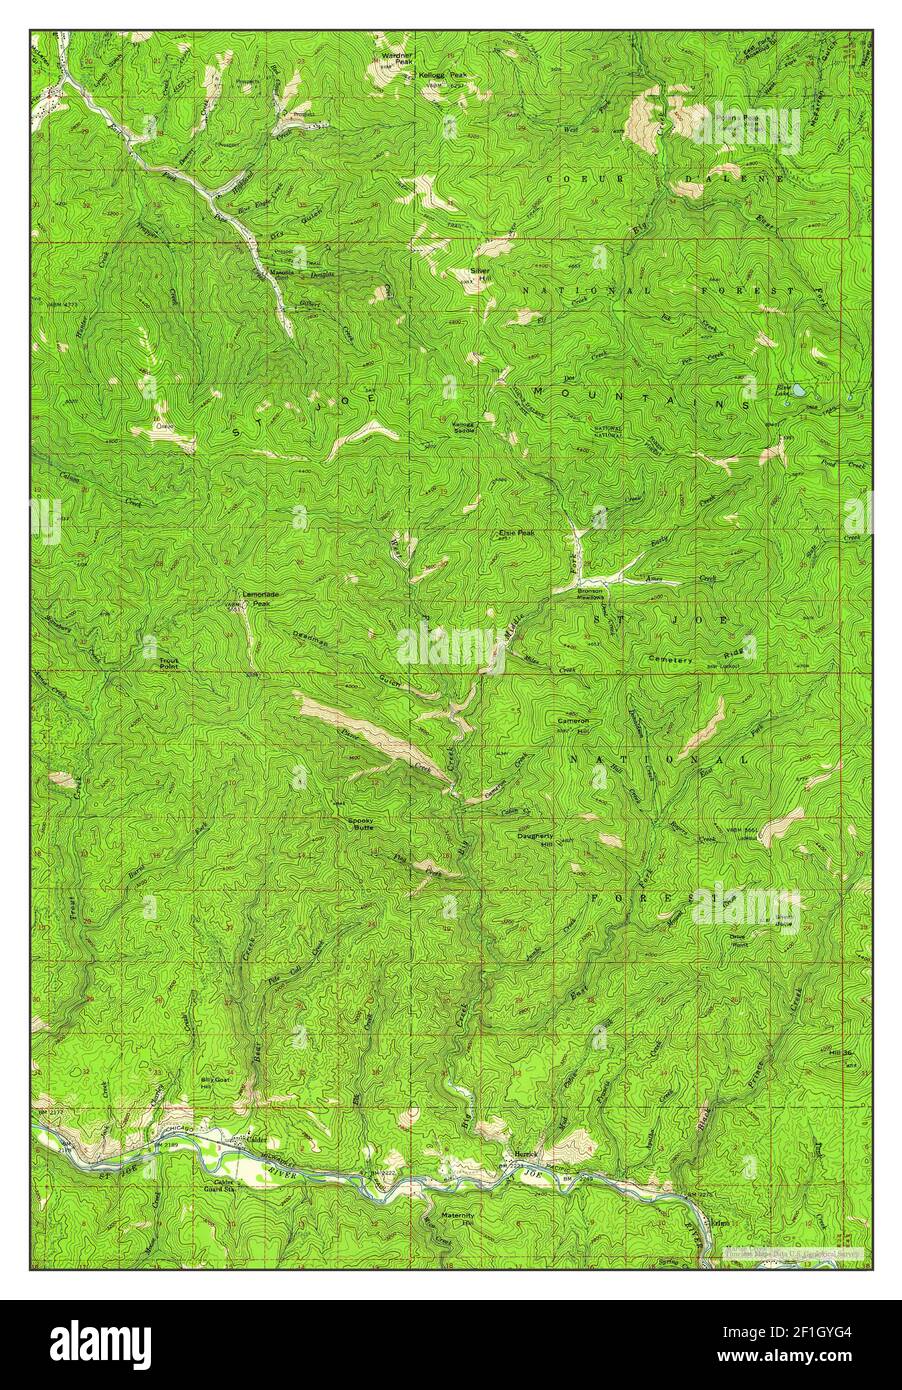 Calder, Idaho, map 1957, 1:62500, United States of America by Timeless Maps, data U.S. Geological Survey Stock Photo